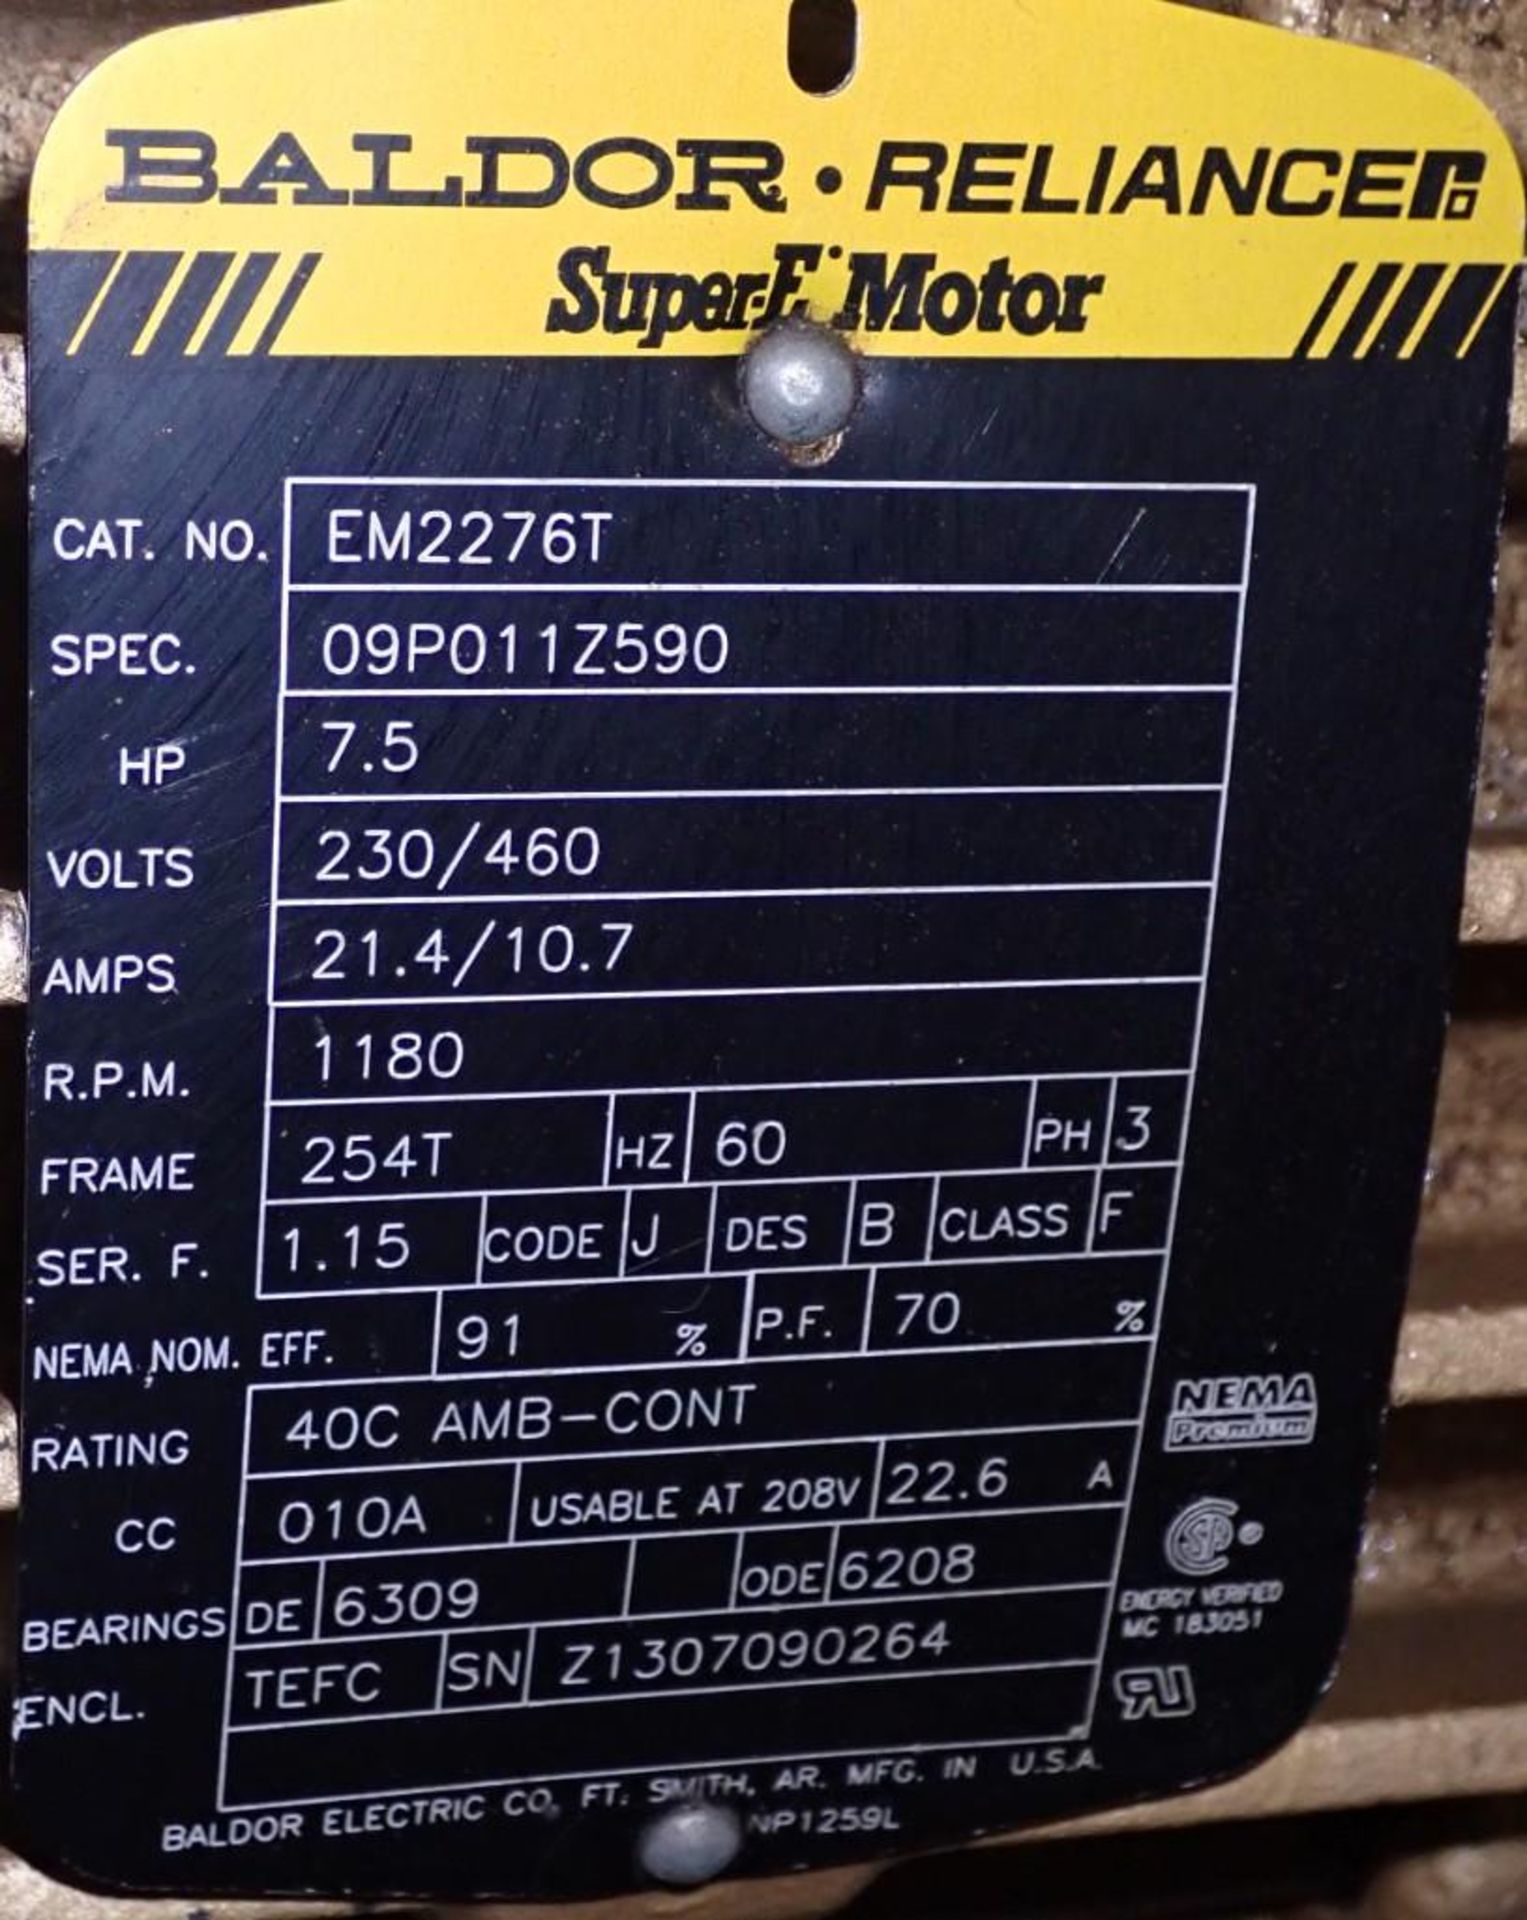 7.5 HP Baldor #EM2276T Super-E Motor - Image 4 of 4